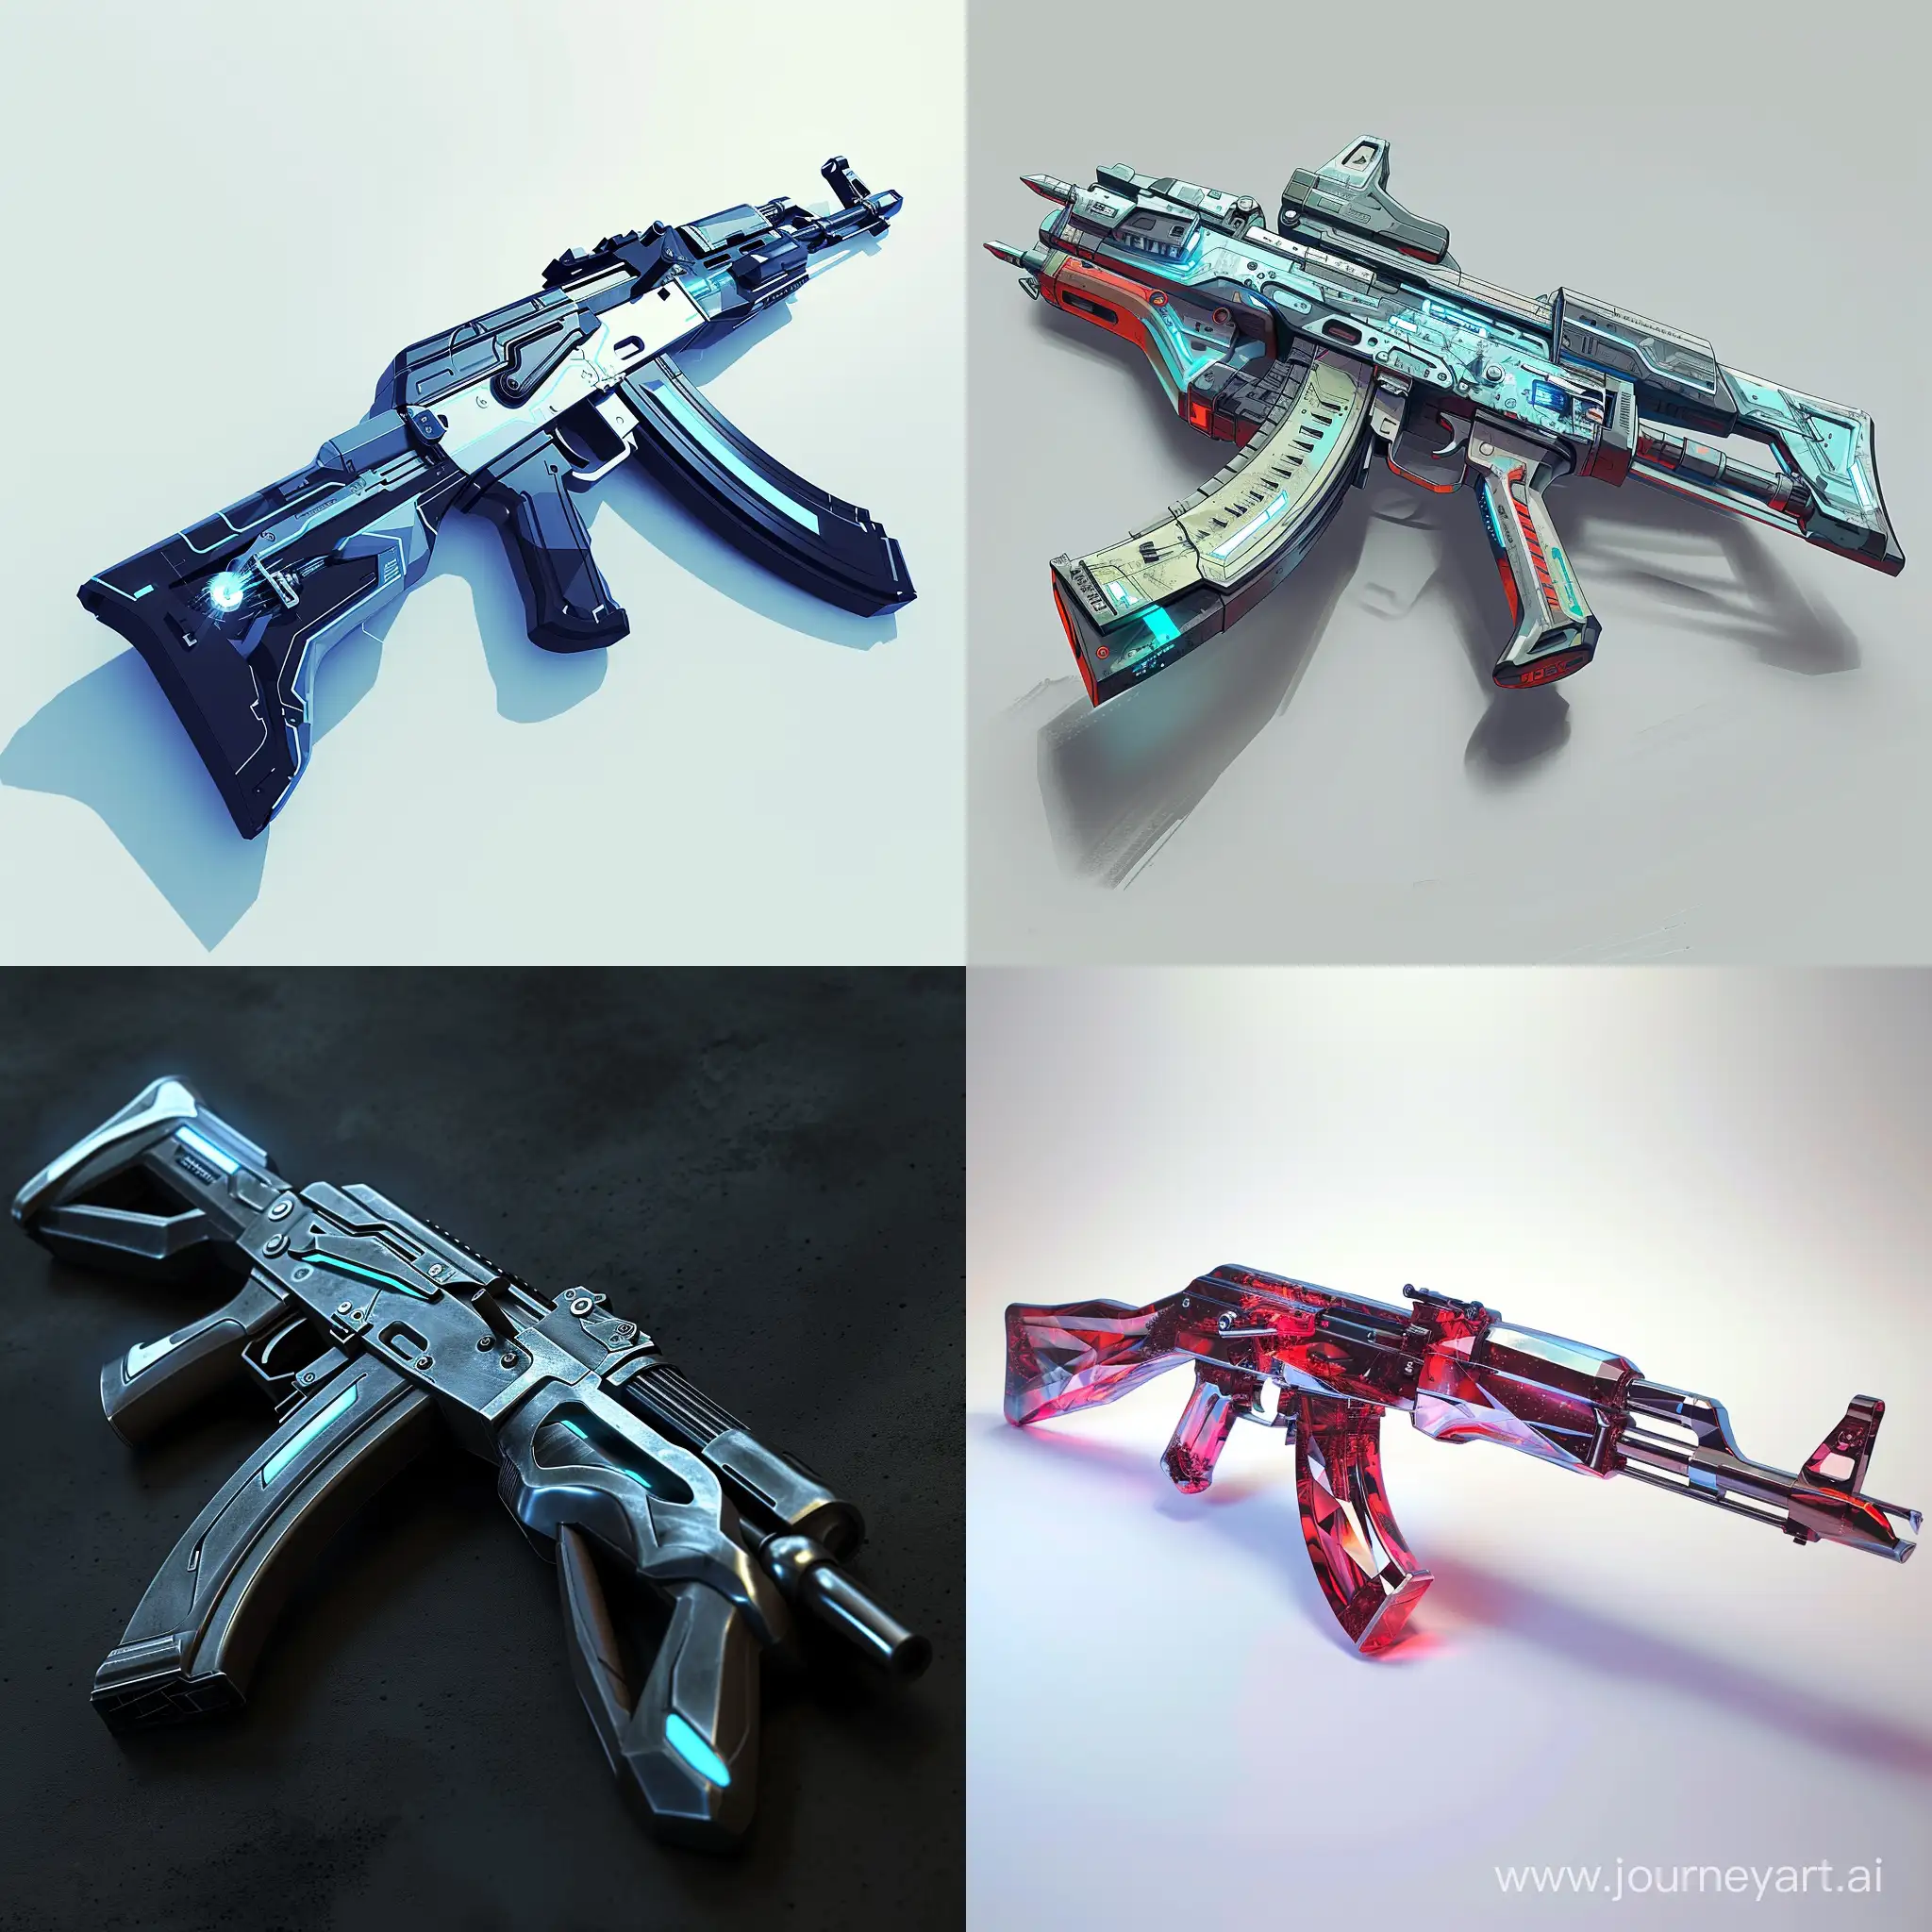 Futuristic-AK47-with-Unusual-Shapes-SciFi-Art